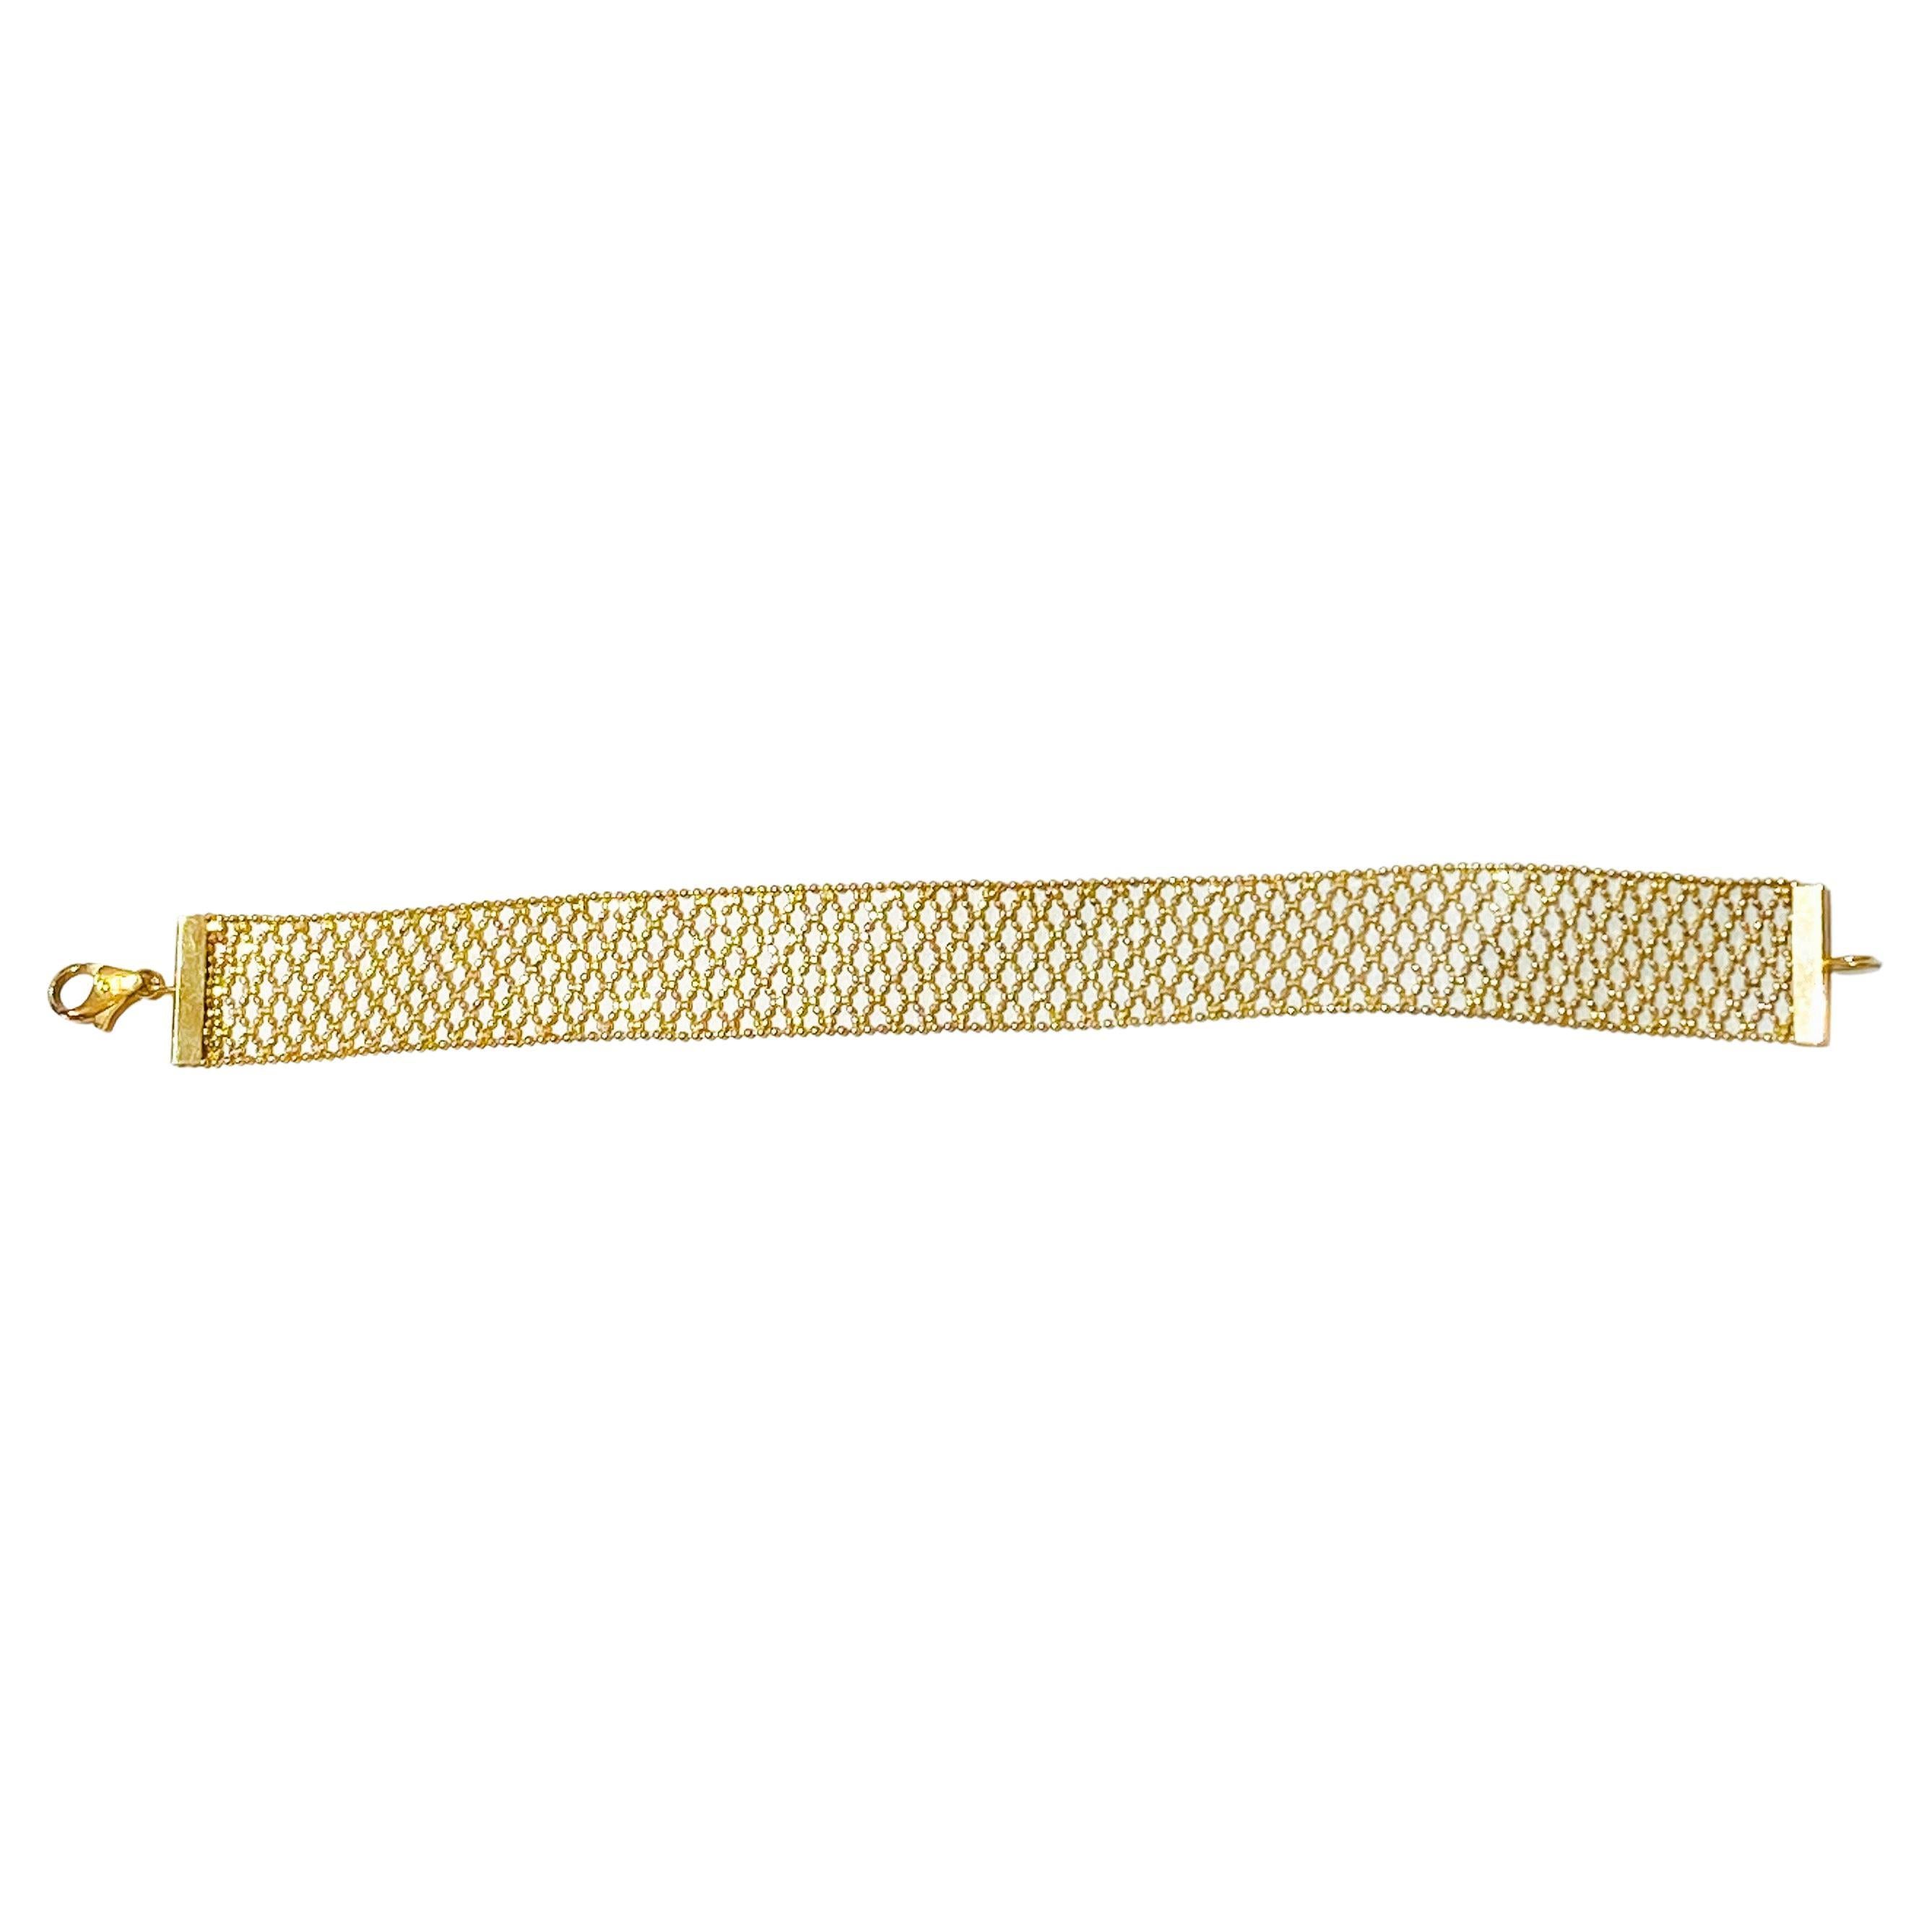 Mesh Weaved Bracelet in 18K Yellow Gold Flexible Easy On Off Lobster Clasp 18 K